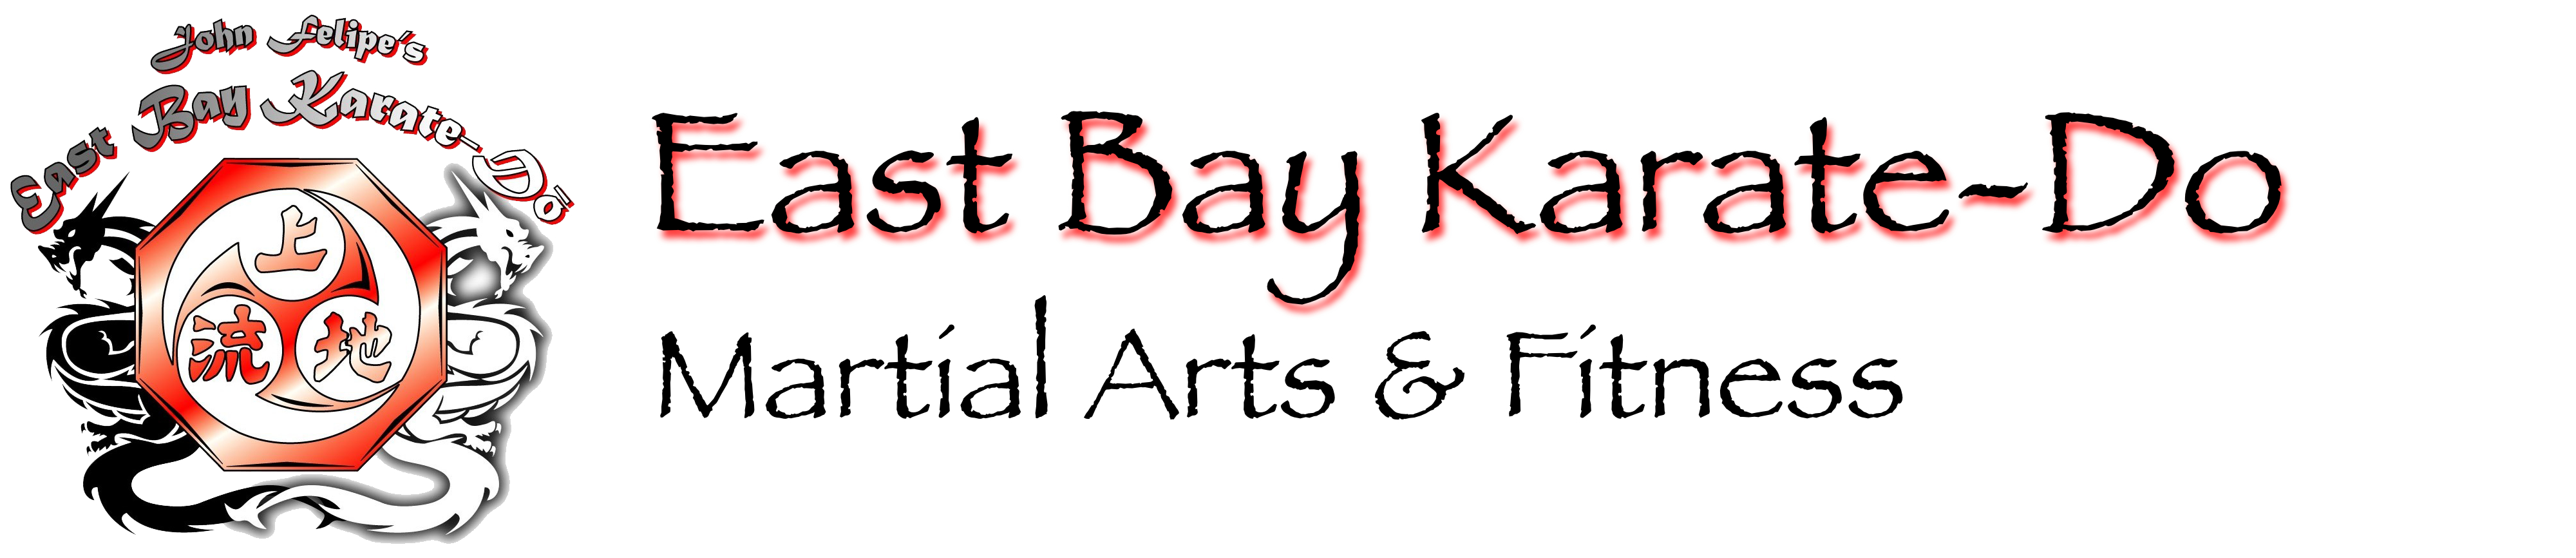 East Bay Karate-Do Logo